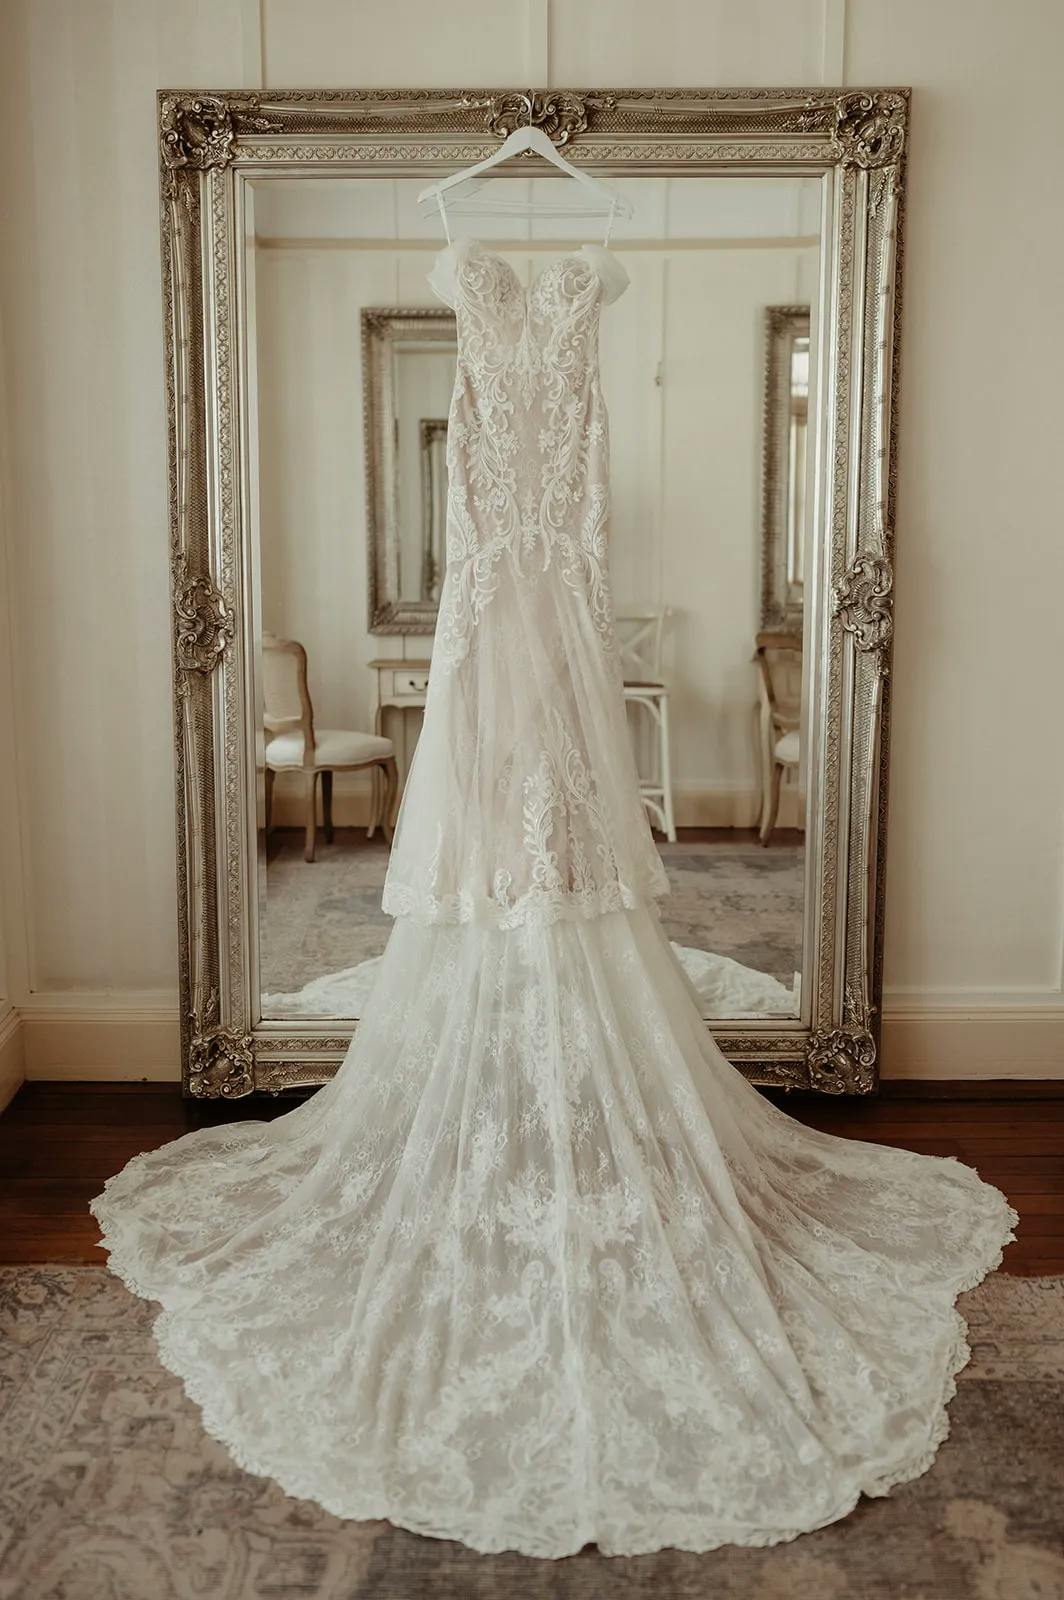 Wedding dress hanging on mirror